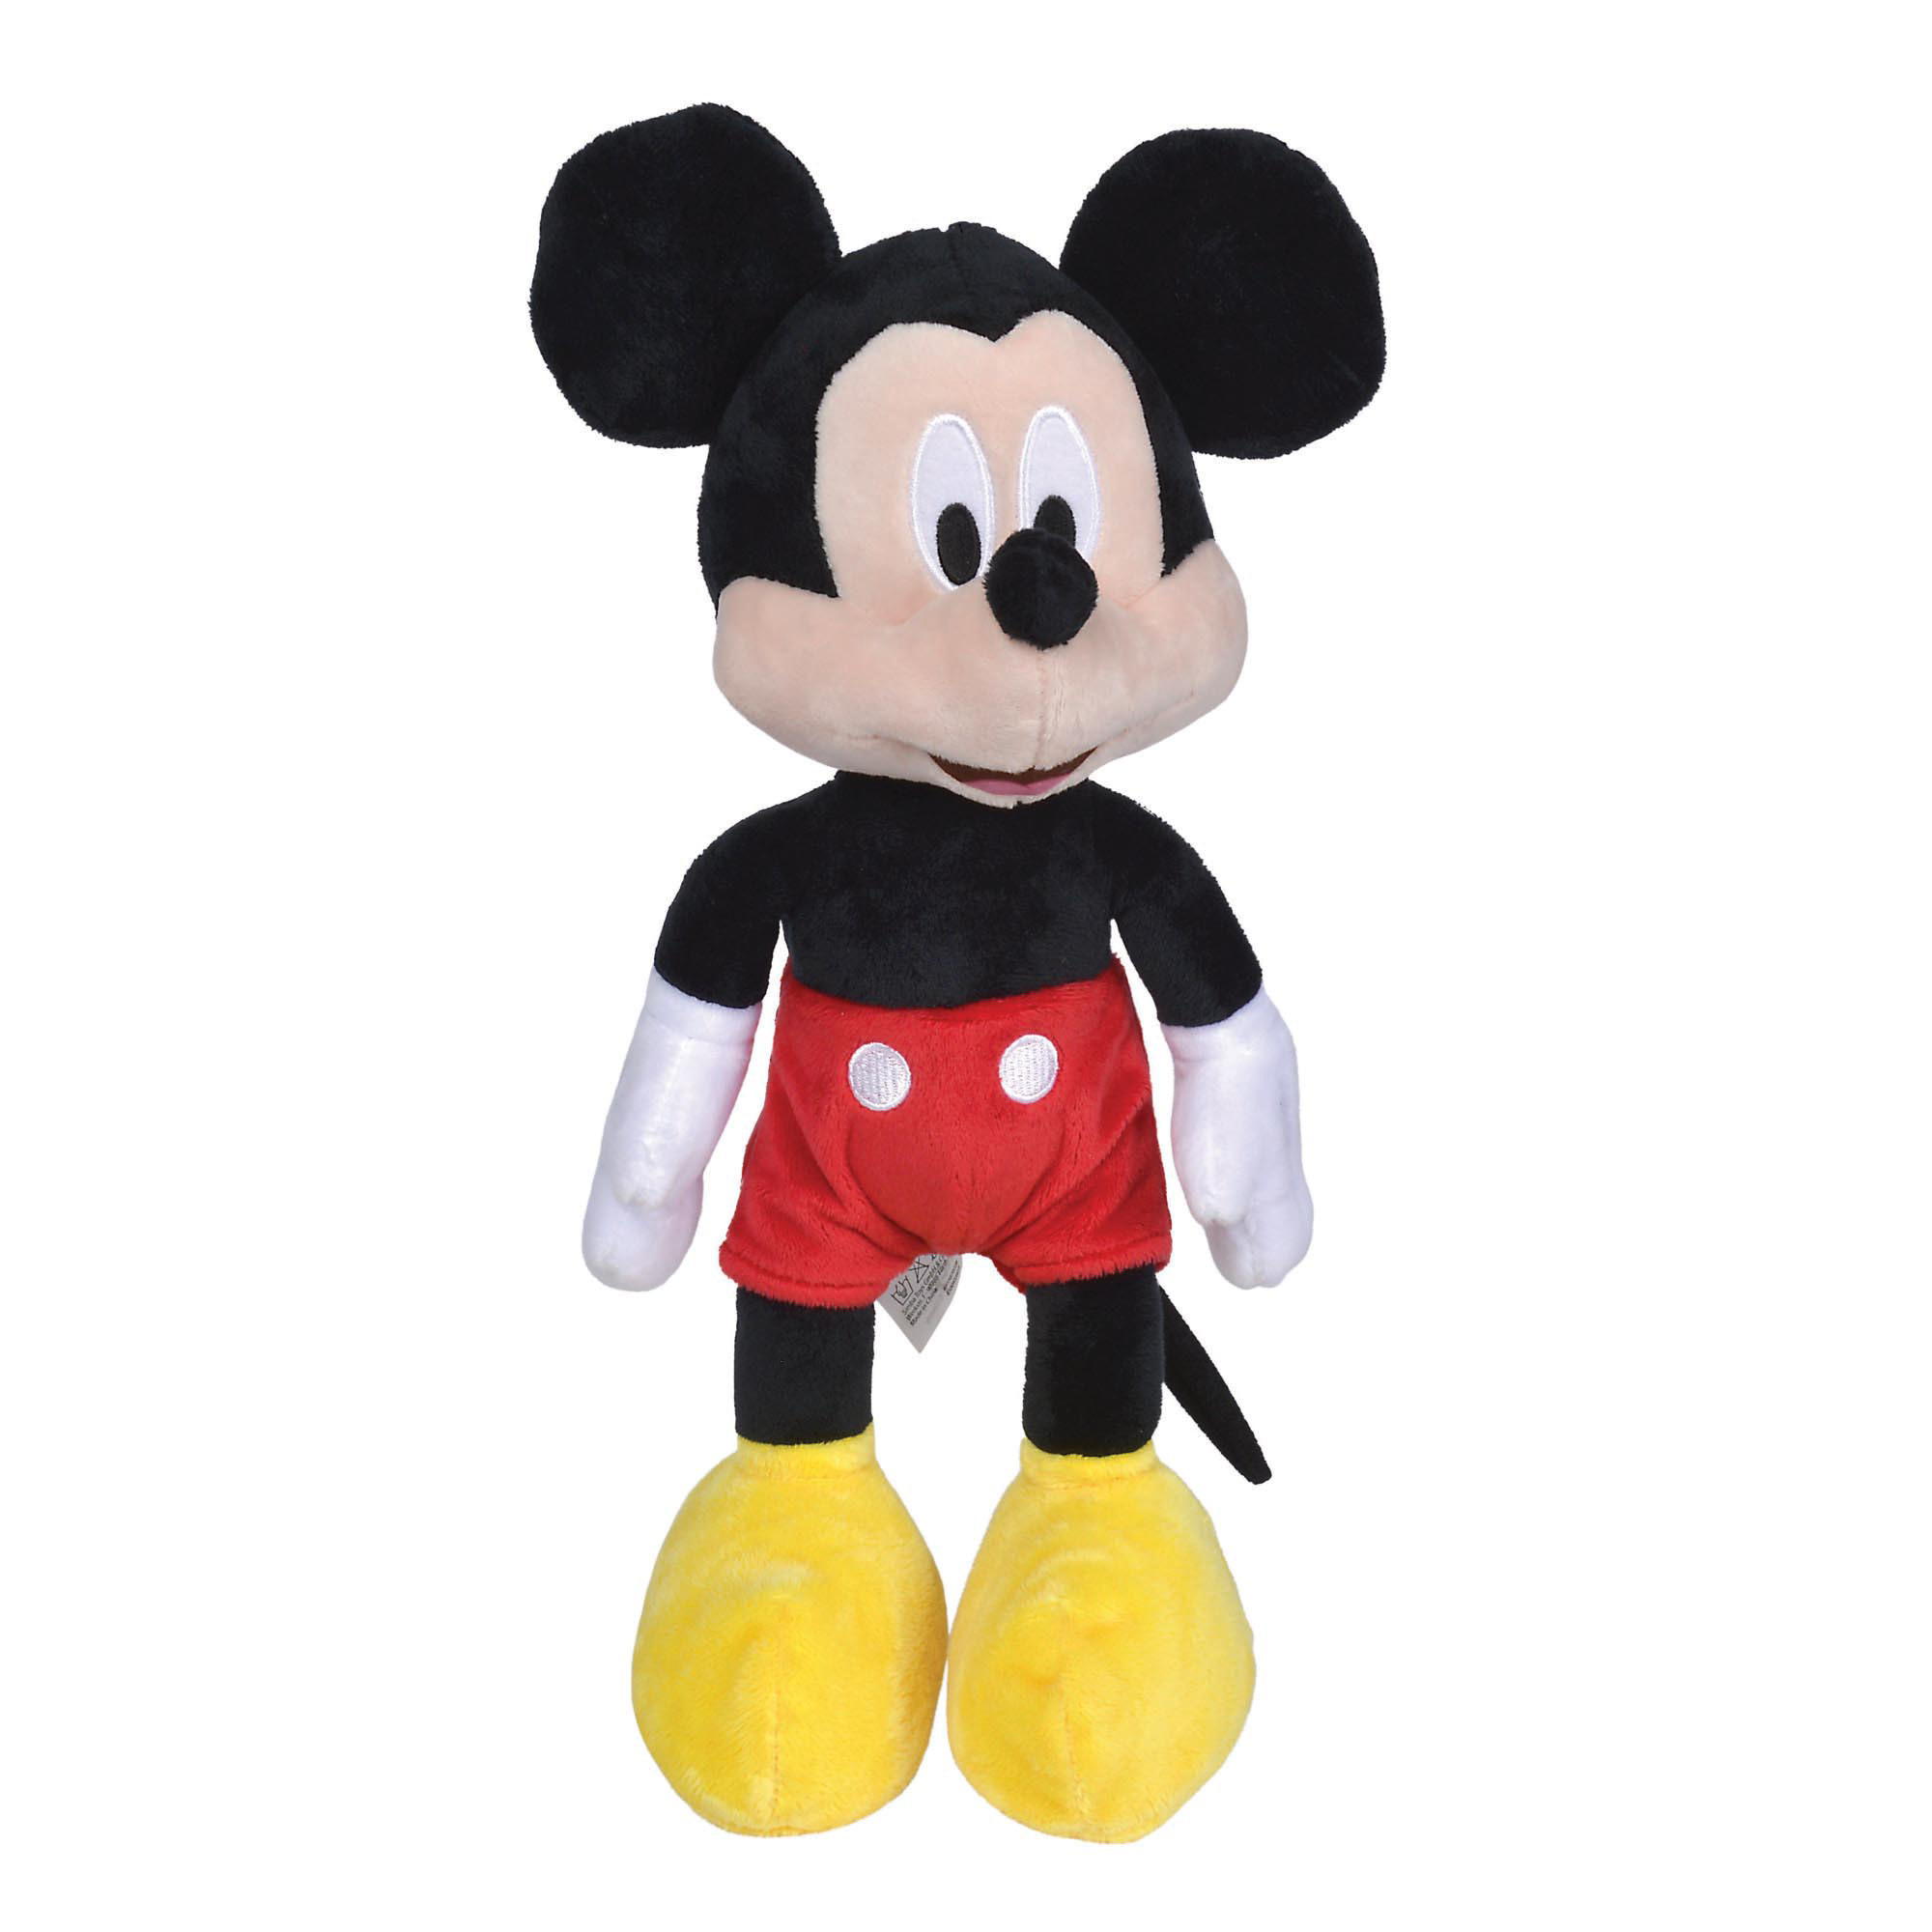 Peluche topolino 25 cm - Disney